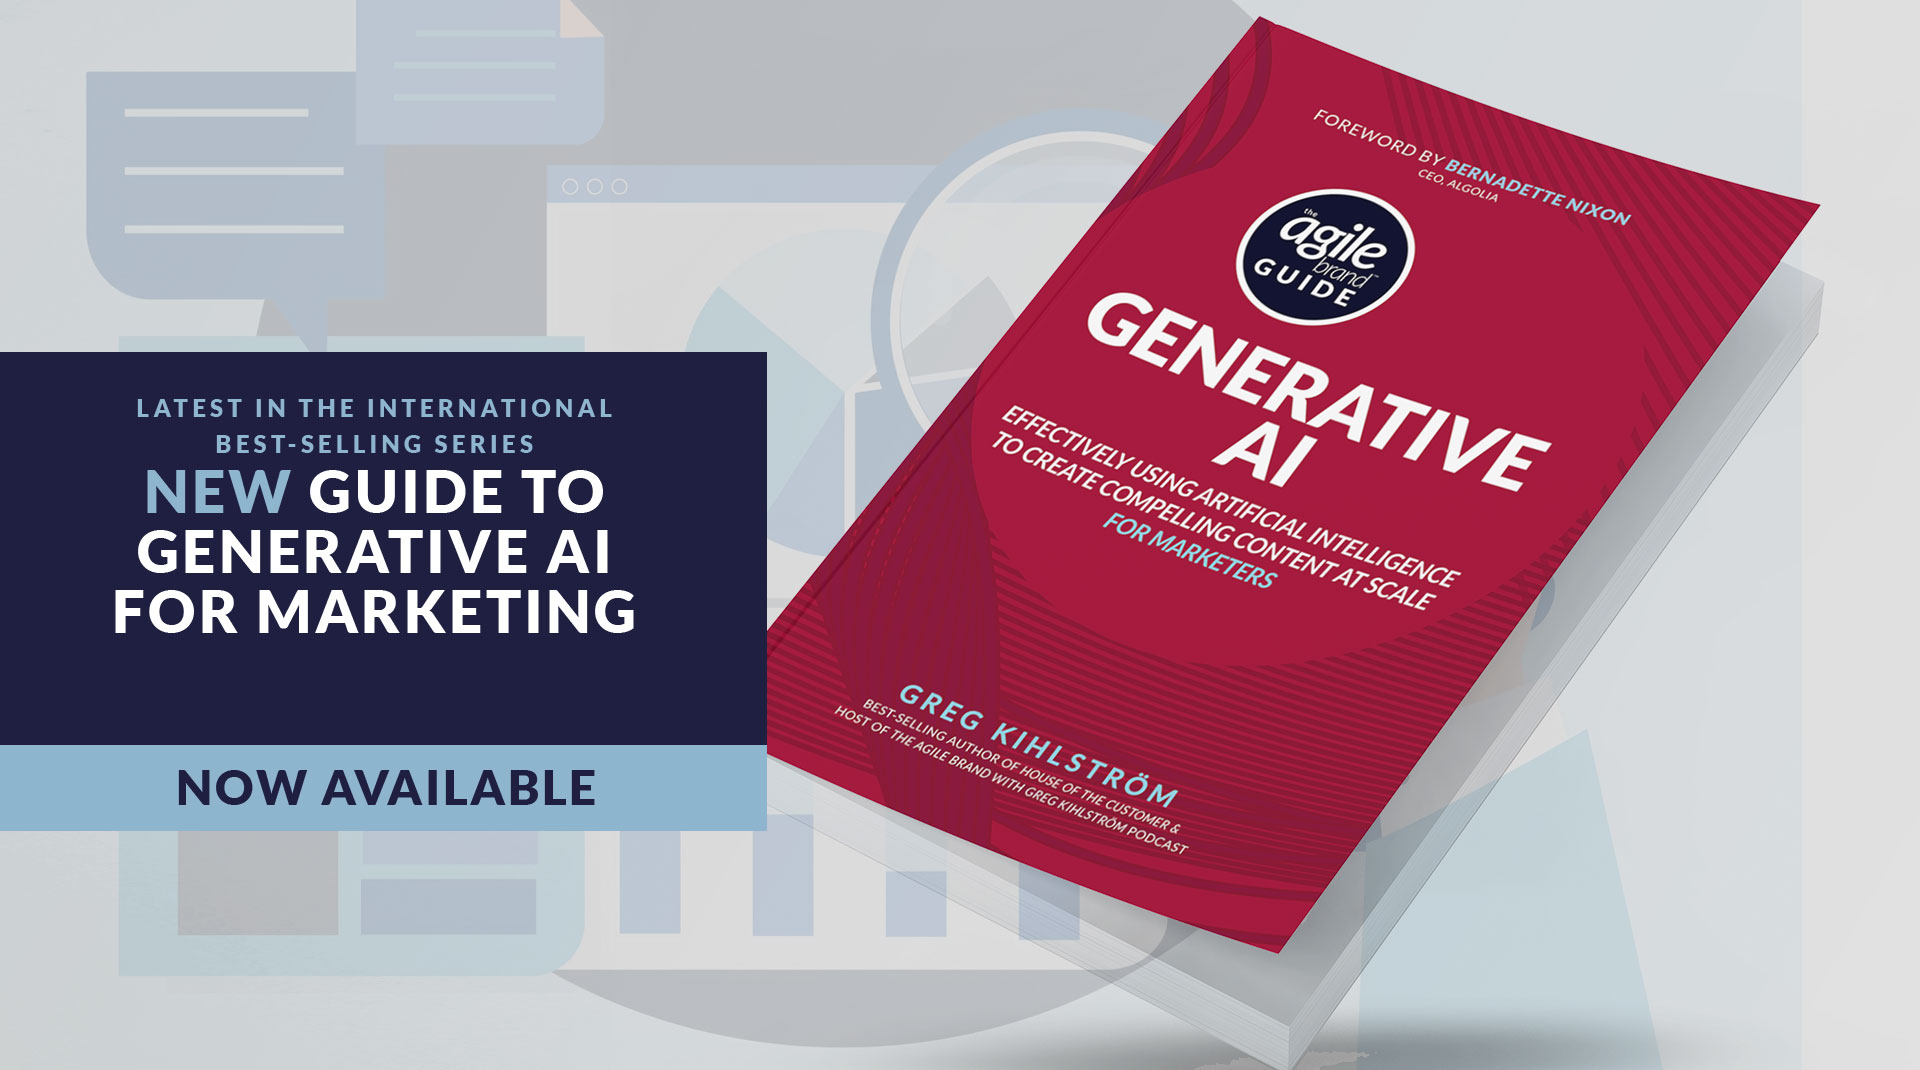 The Agile Brand Guide to Generative AI